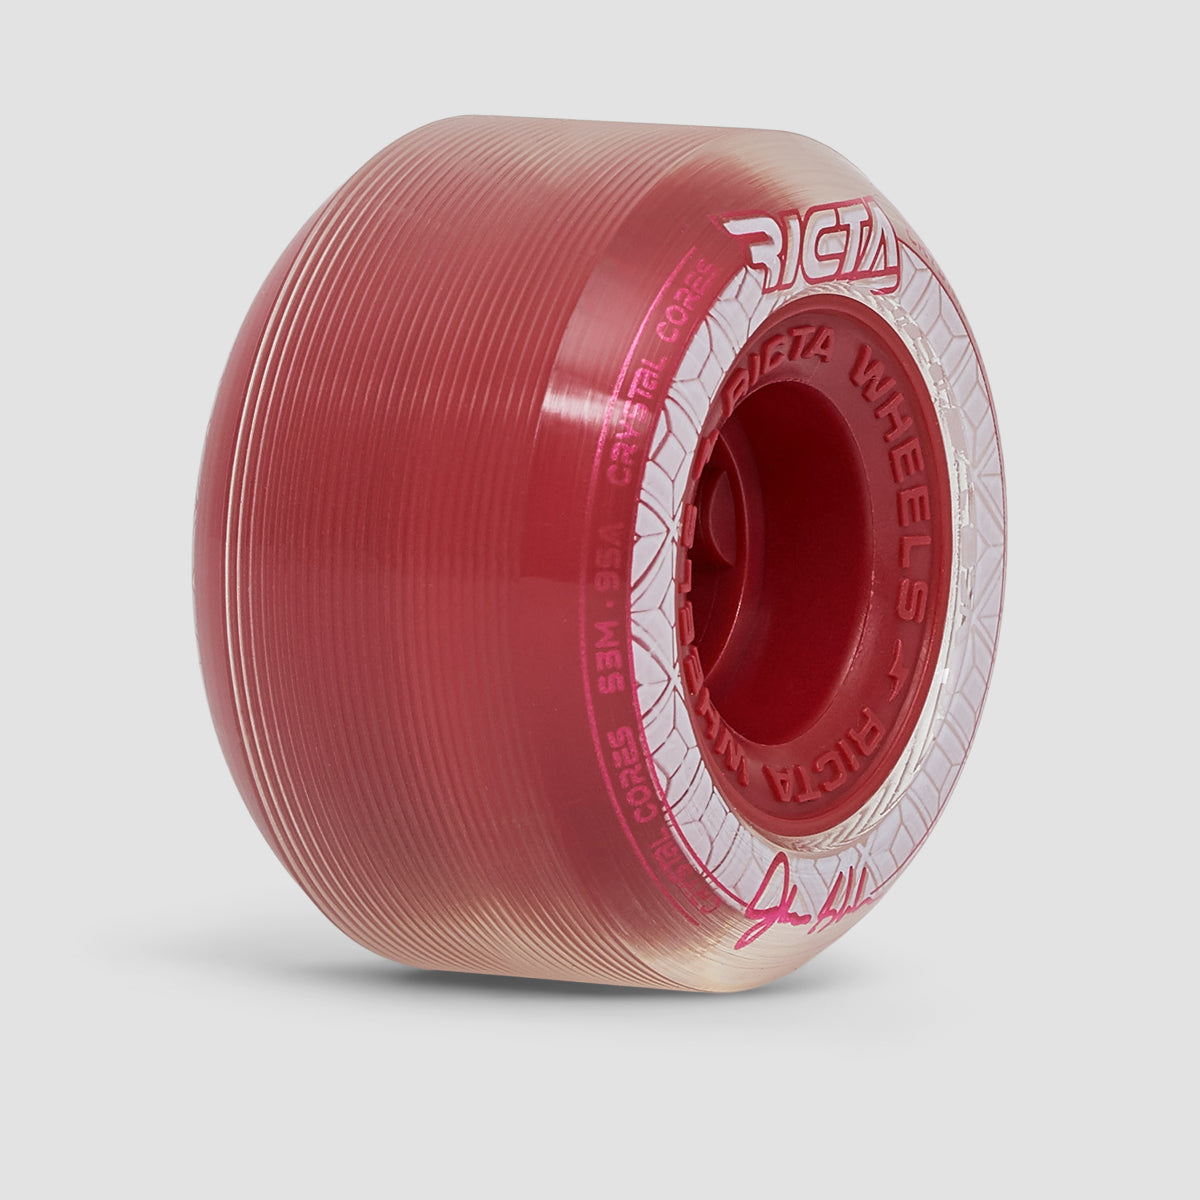 Ricta Crystal Cores Shanahan 95a Skateboard Wheels Clear Metallic Red 53mm